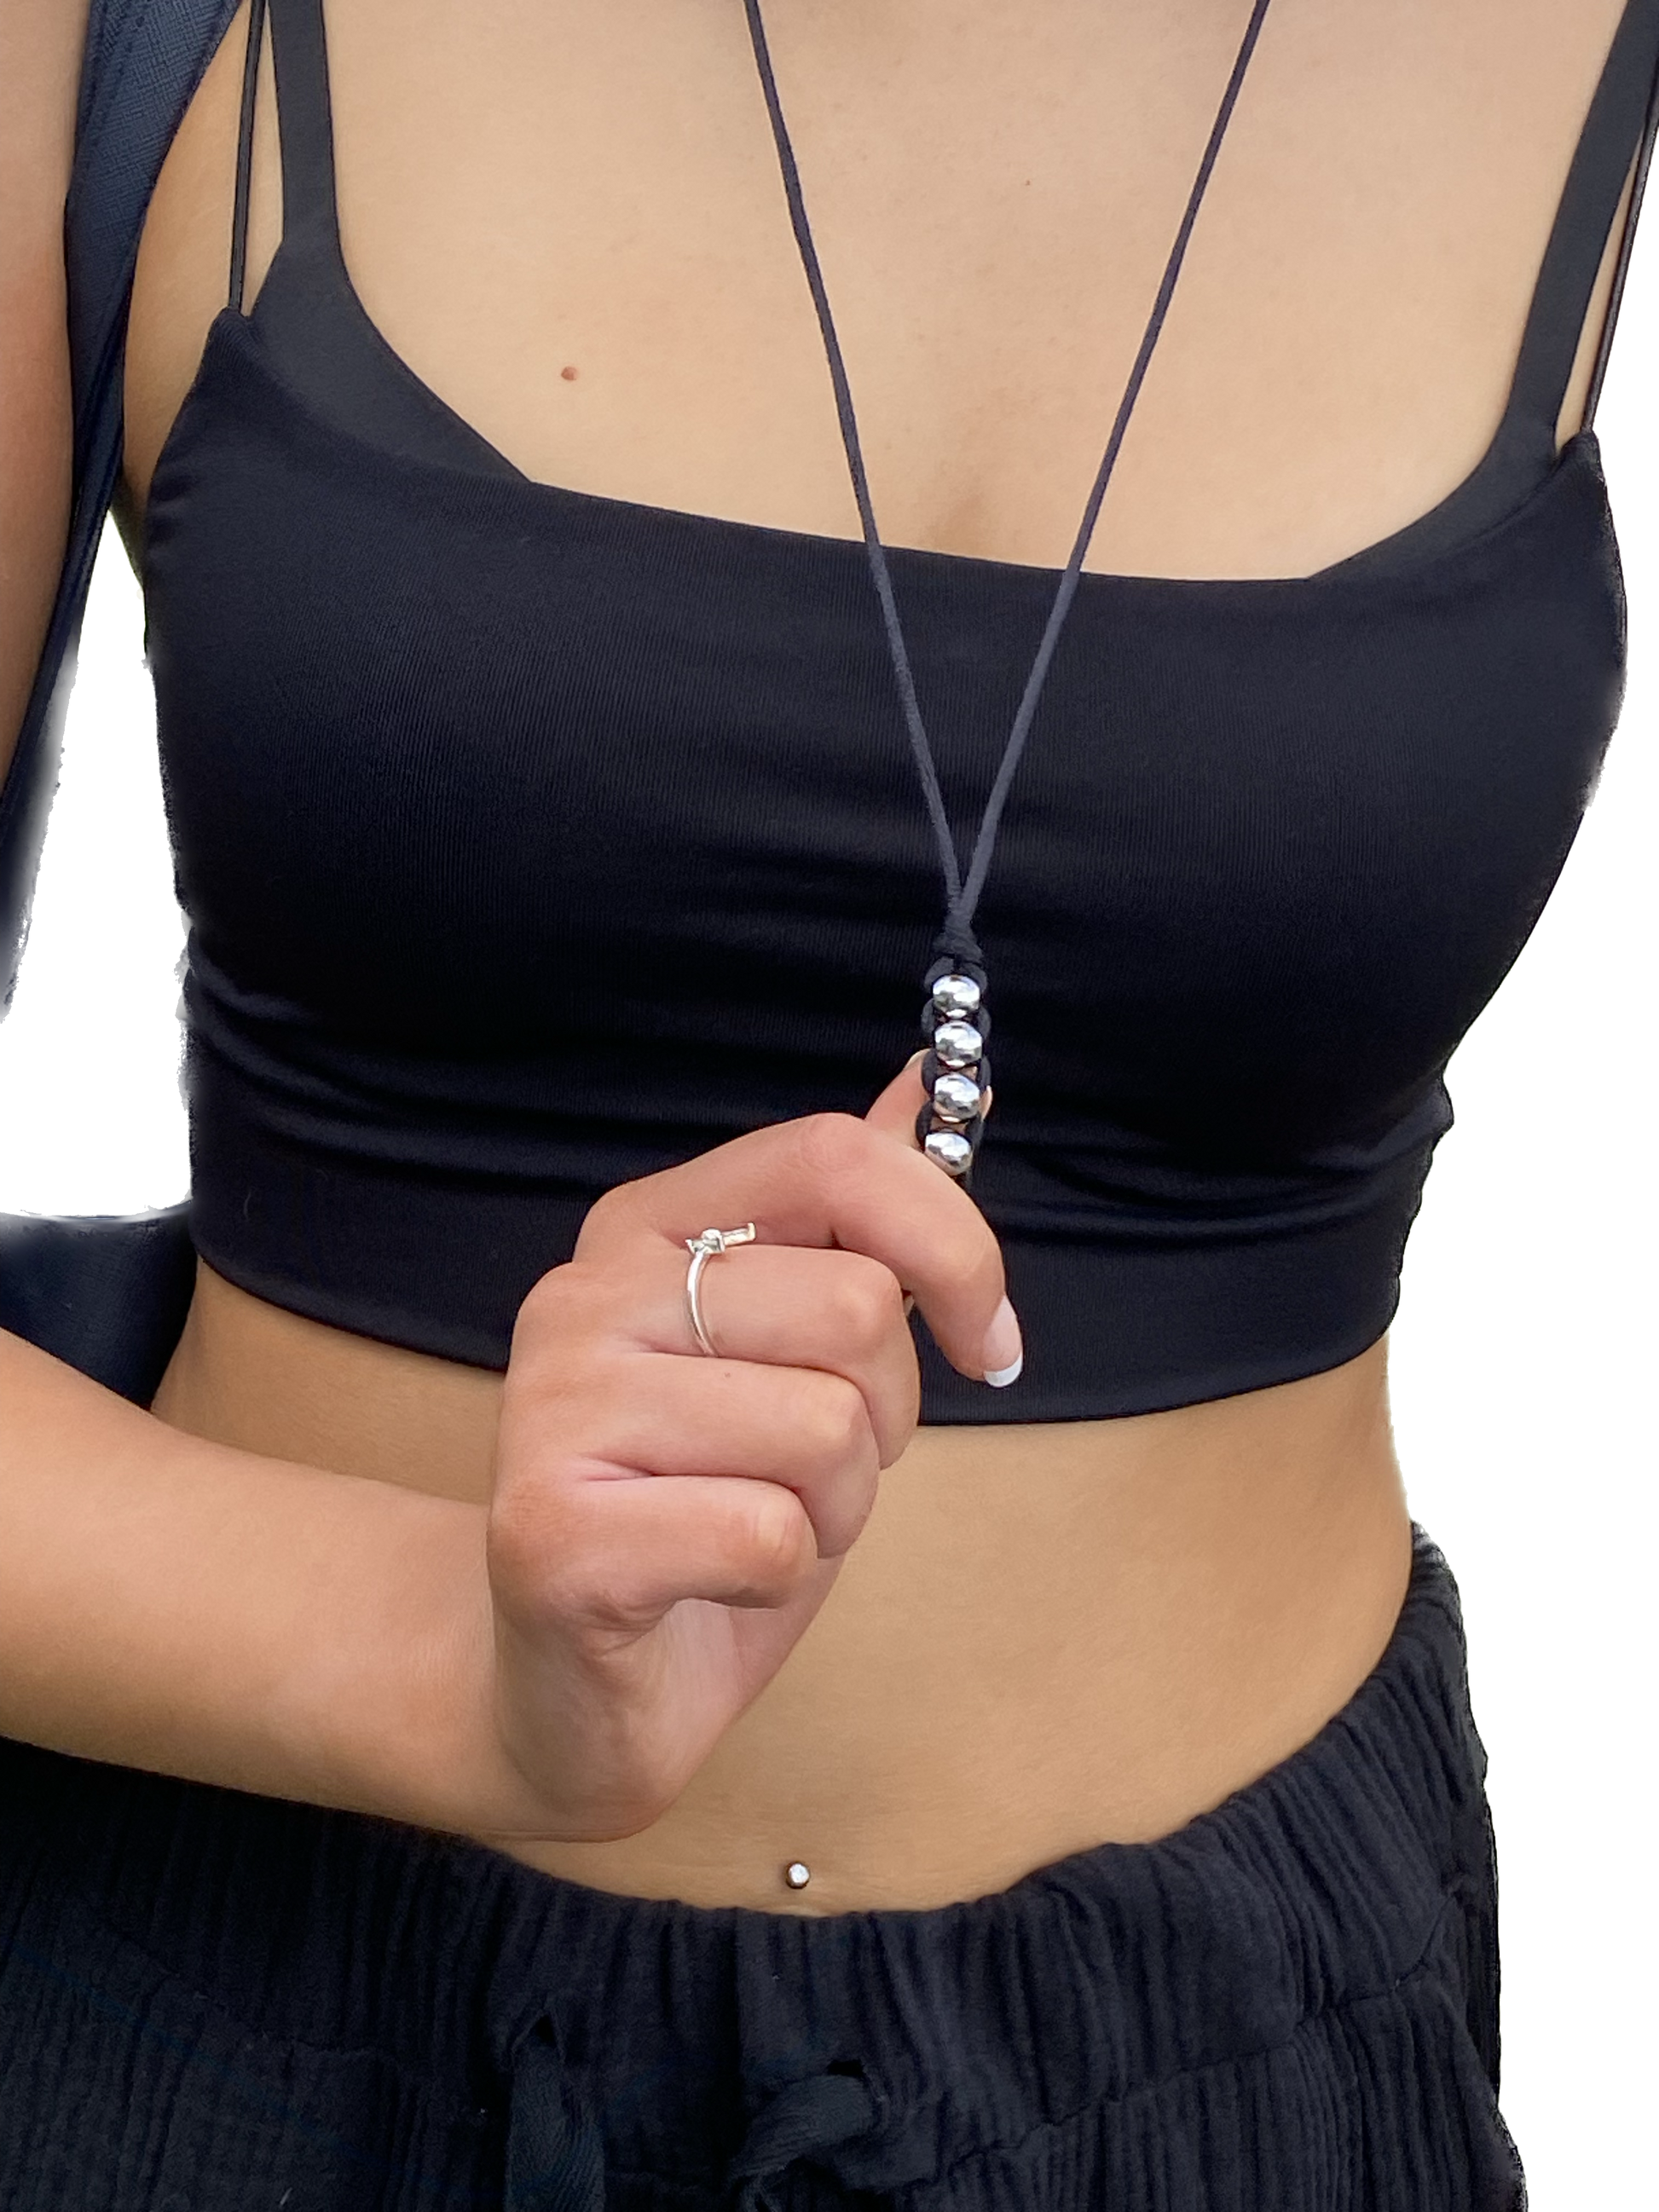 kaiko caterpillar unisex fidget necklace in hand